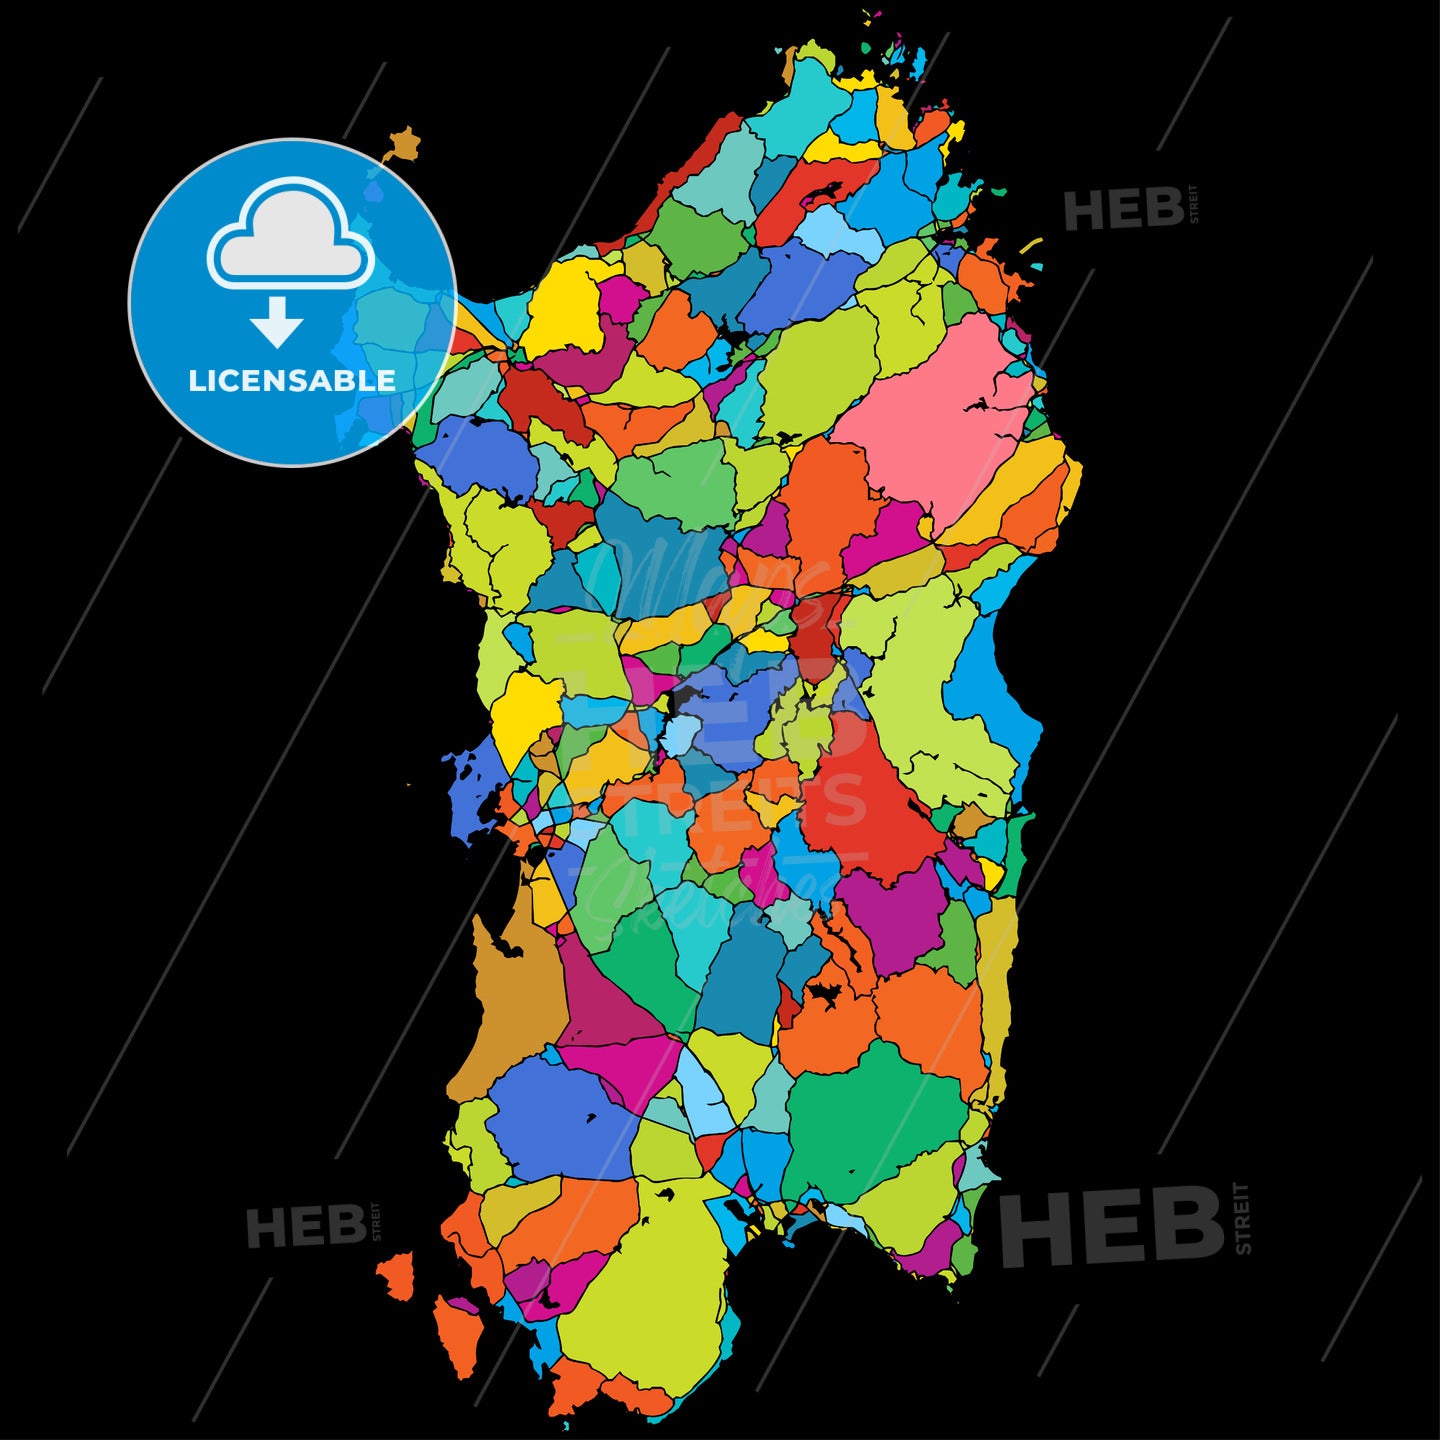 Sardinia, Island, Italy, Colorful Vector Map on Black